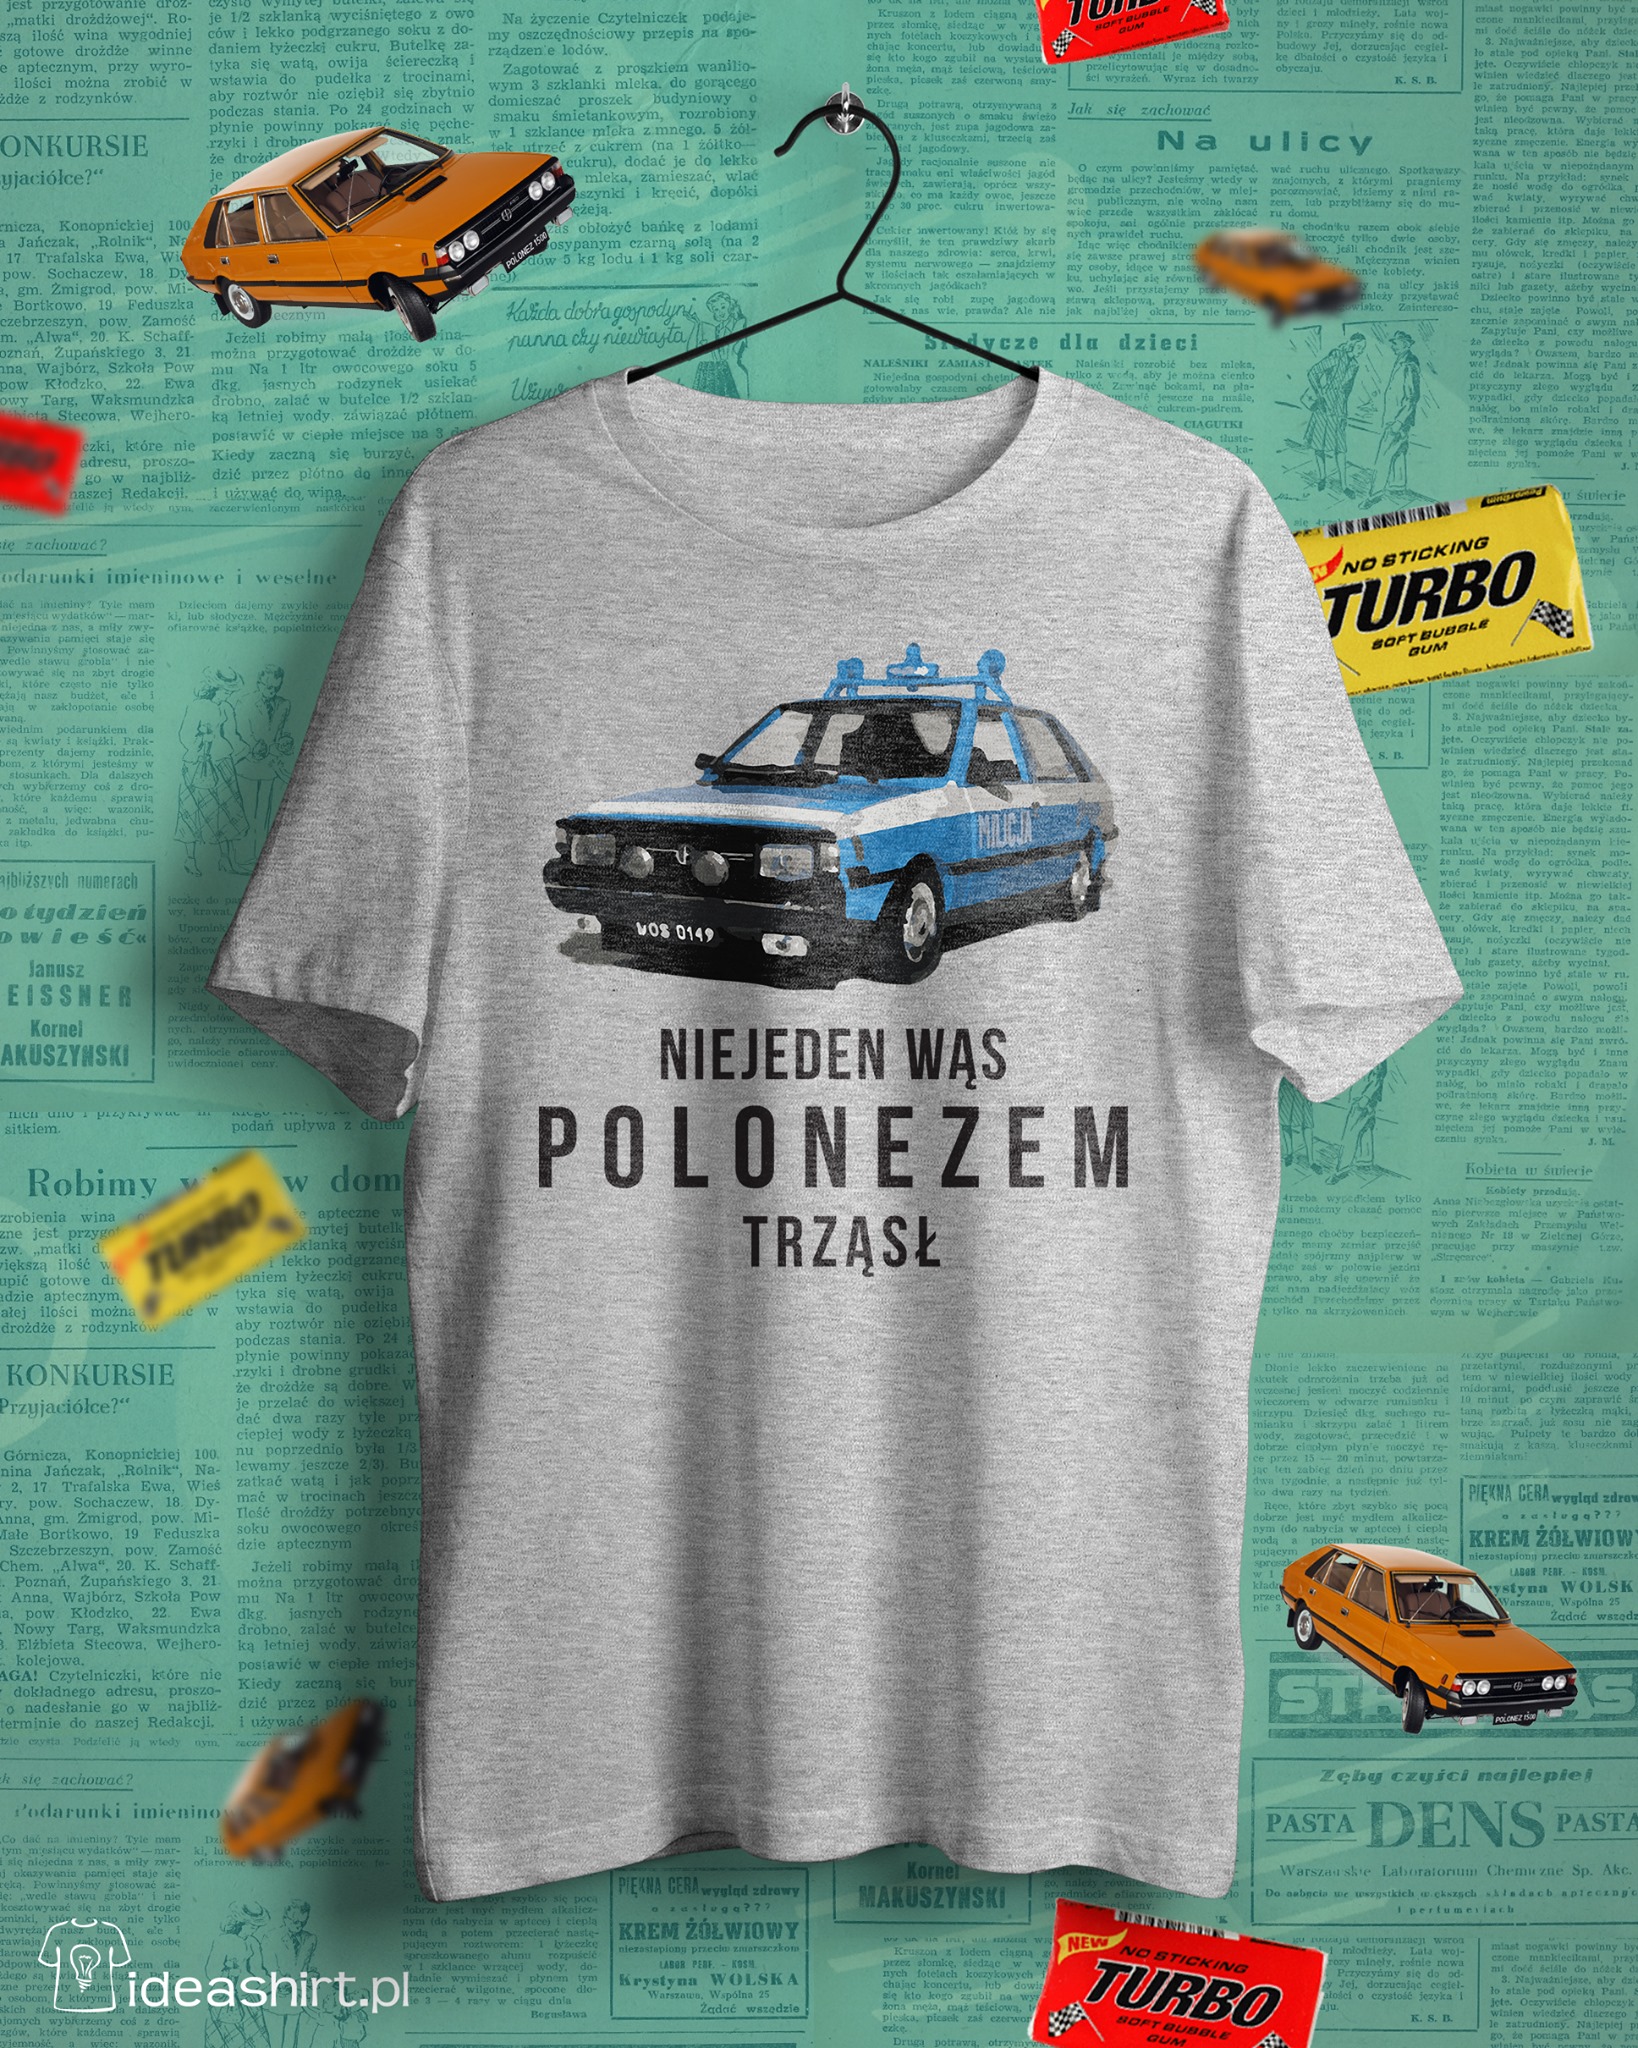 Niejeden Was Polonezem Trzasl - Car picture